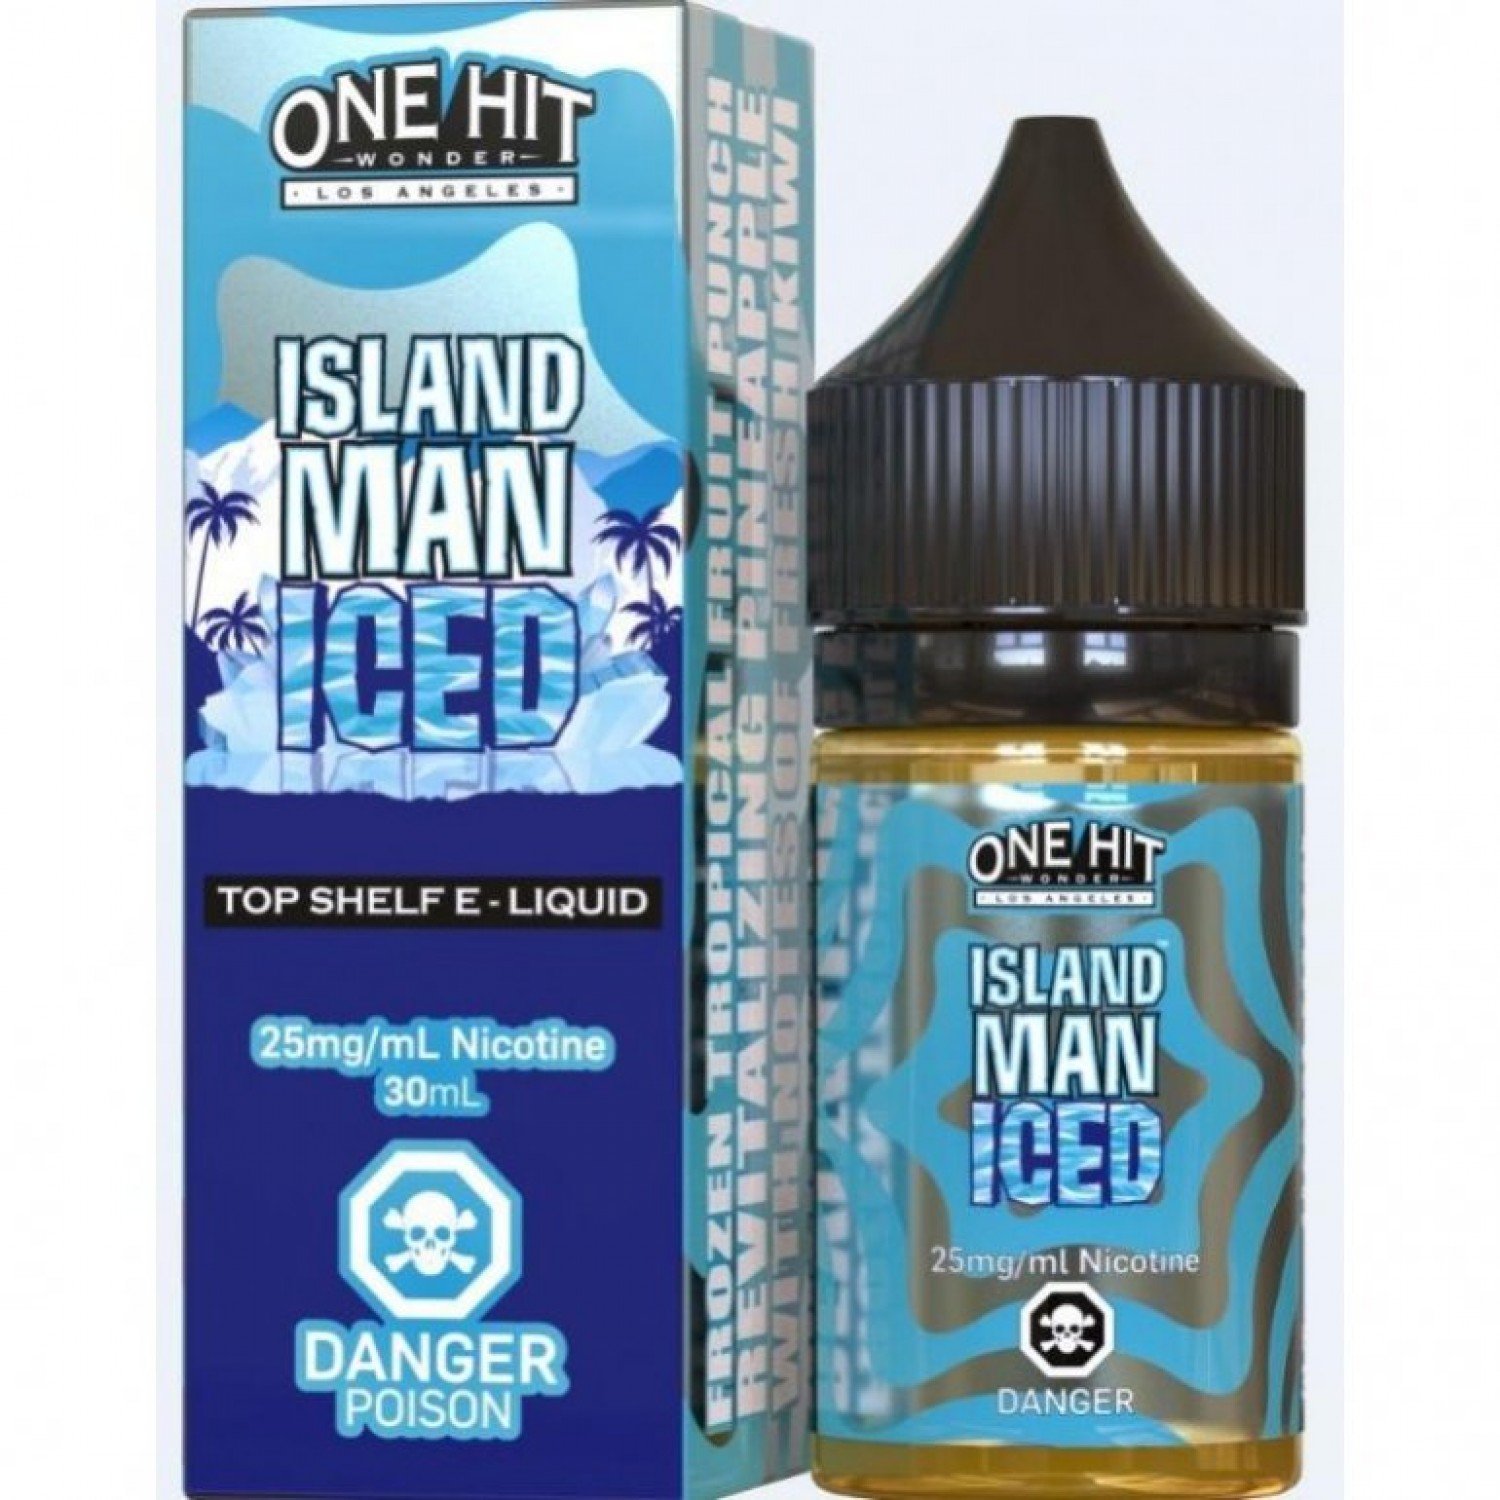 One Hit Wonder - Island Man Iced 30 ml Premium Salt Likit